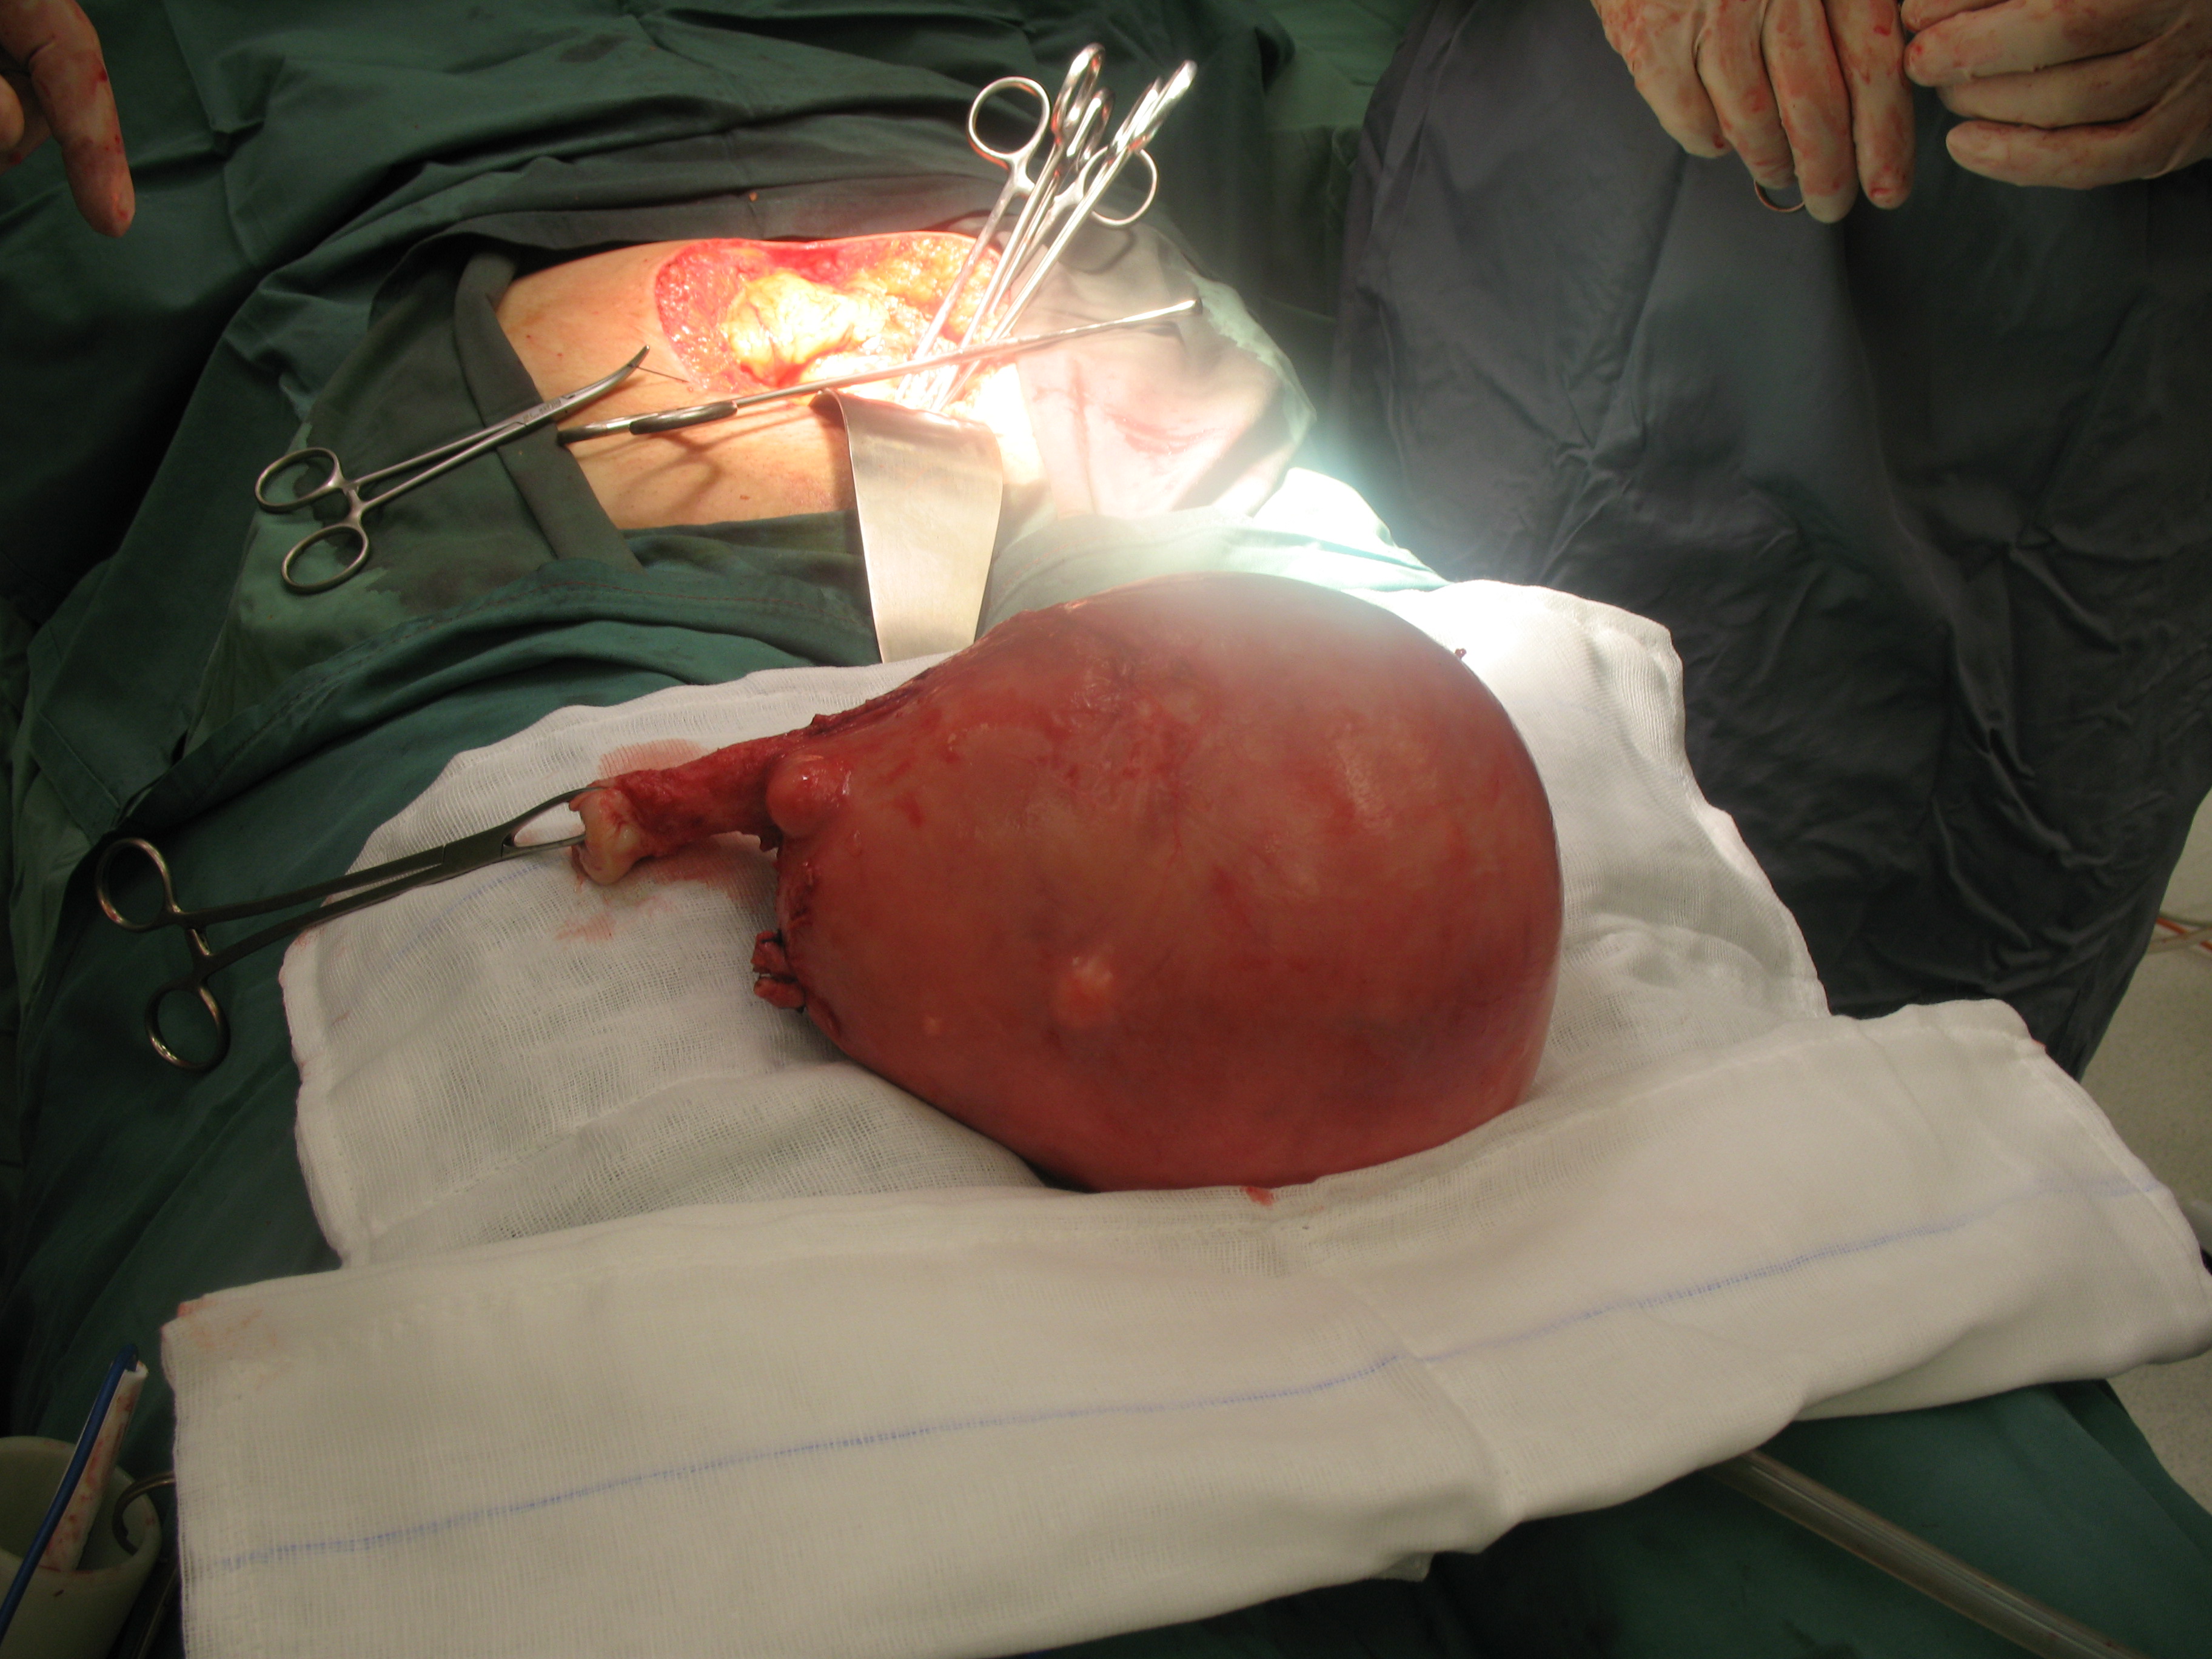 fibroid uterus hysterectomy laparotomy serag youssif